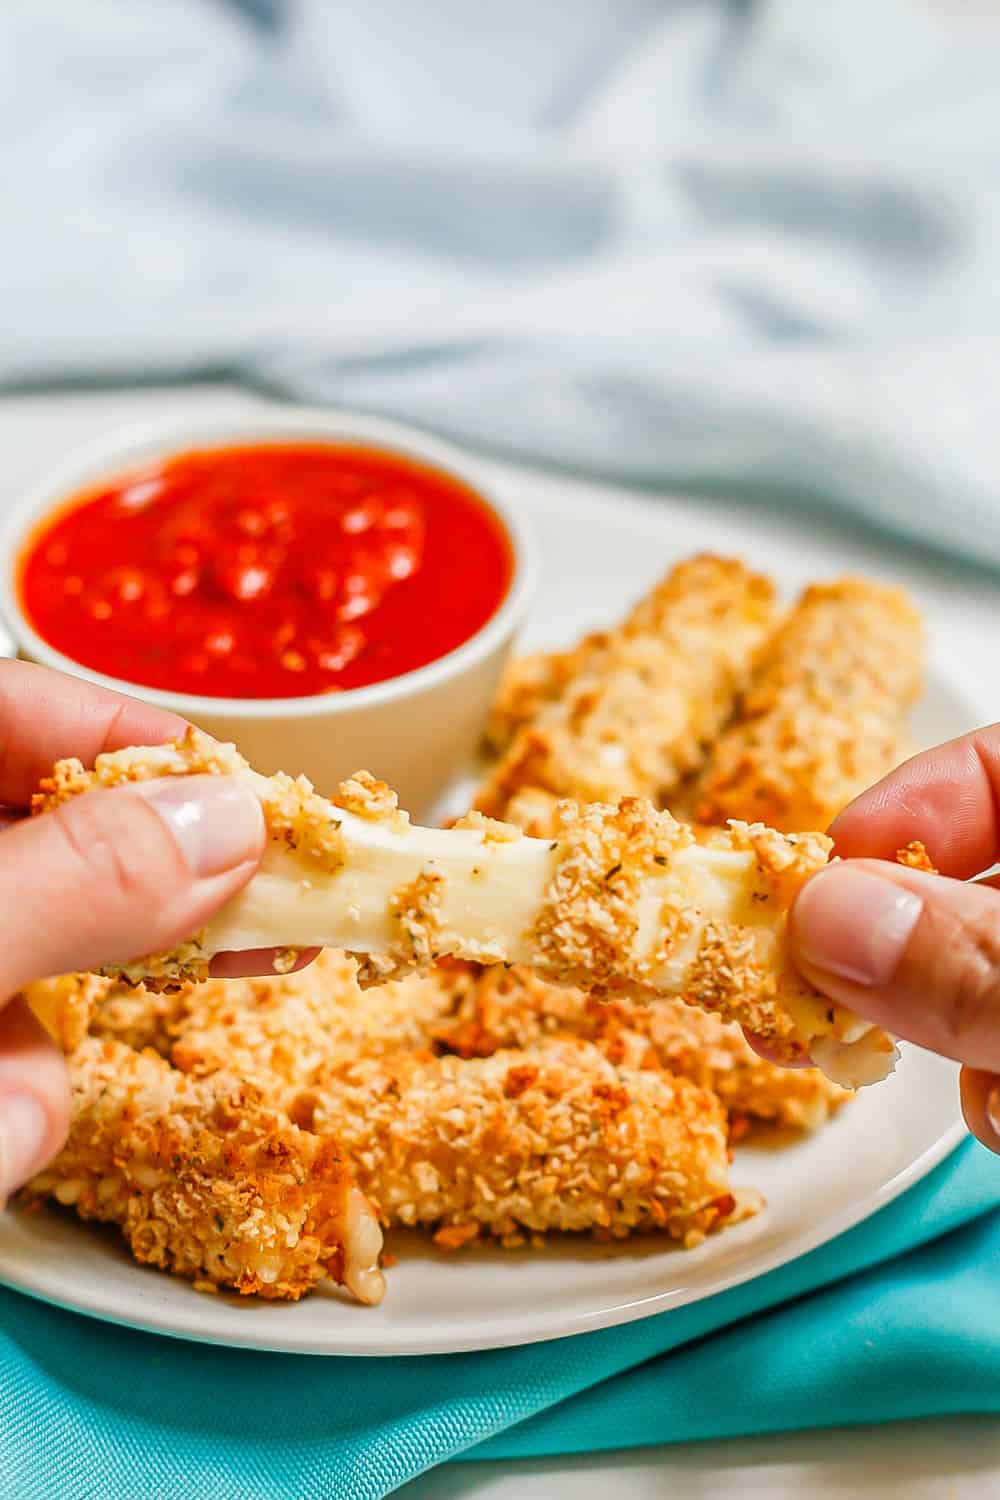 A hand pulling a cheesy breaded mozzarella stick apart in front of a plate of mozzarella sticks with marinara